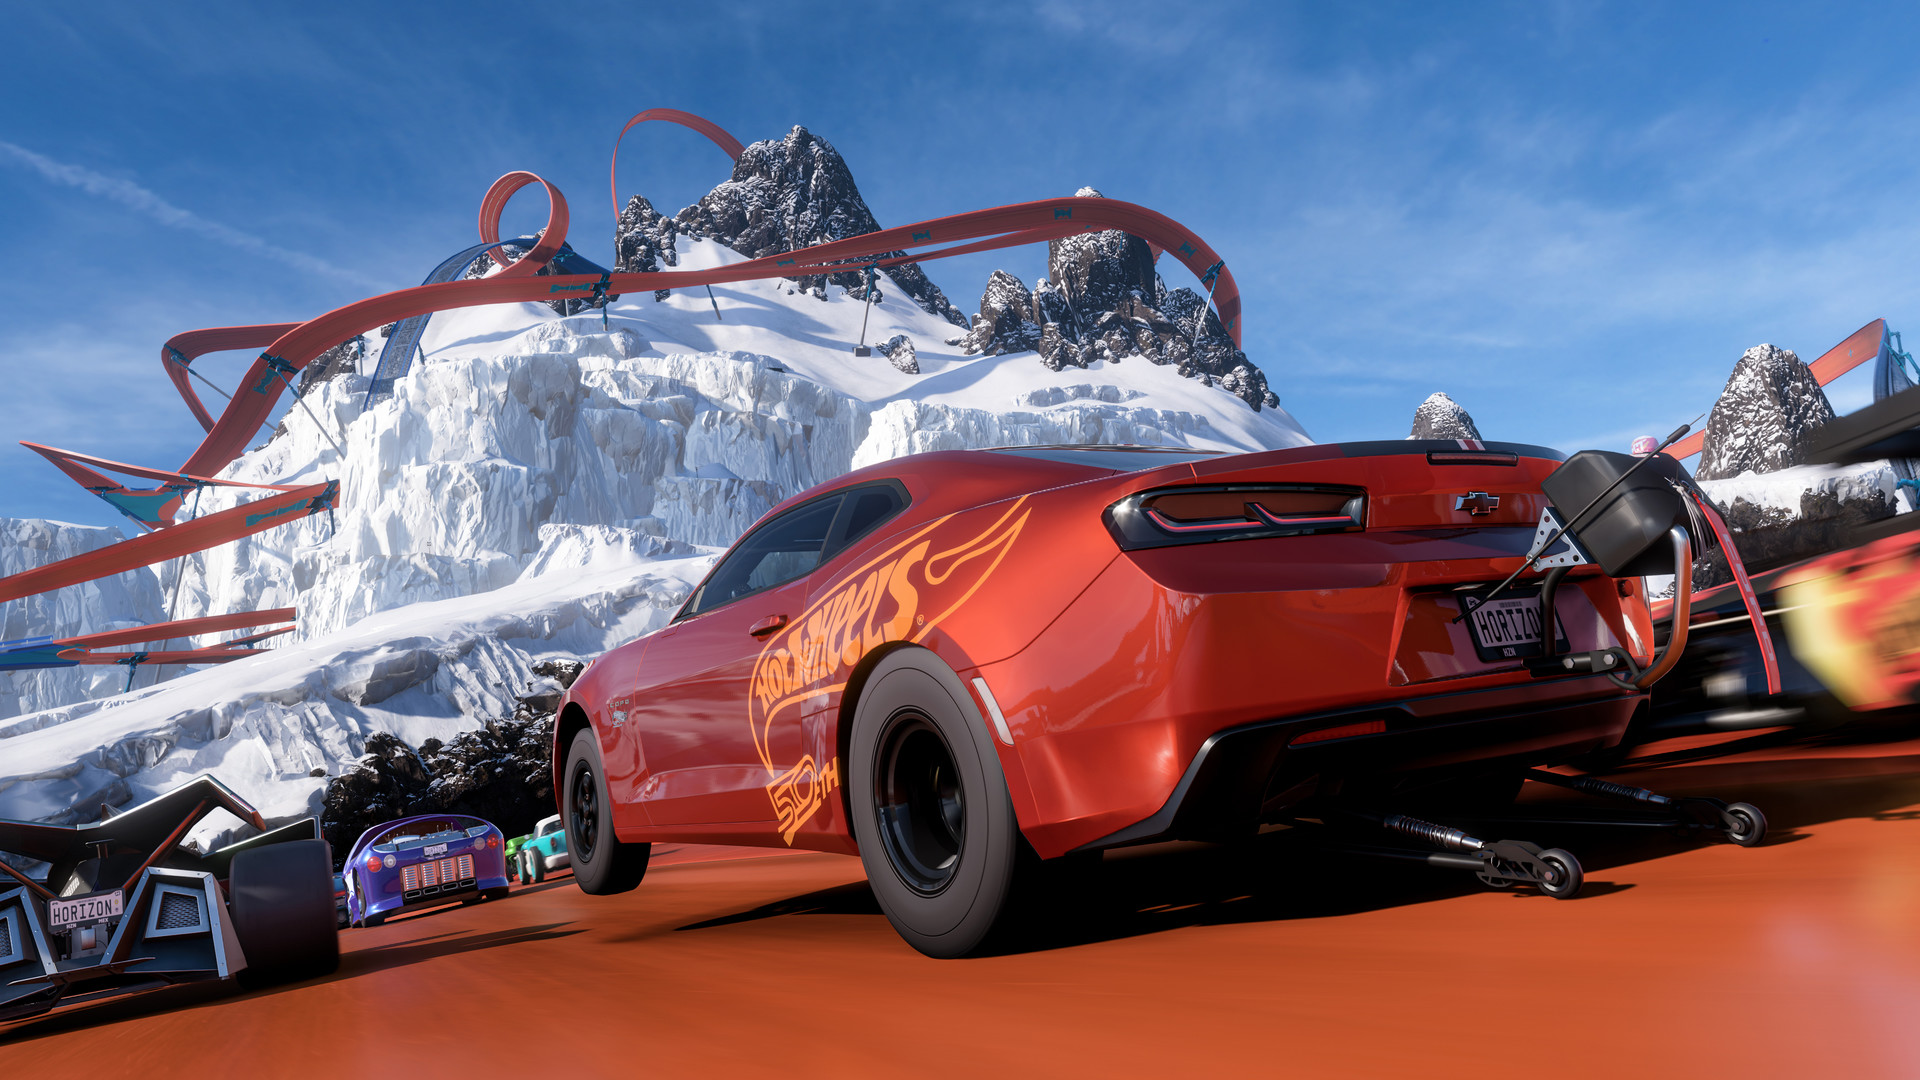 Save 50% on Forza Horizon 5: Hot Wheels on Steam